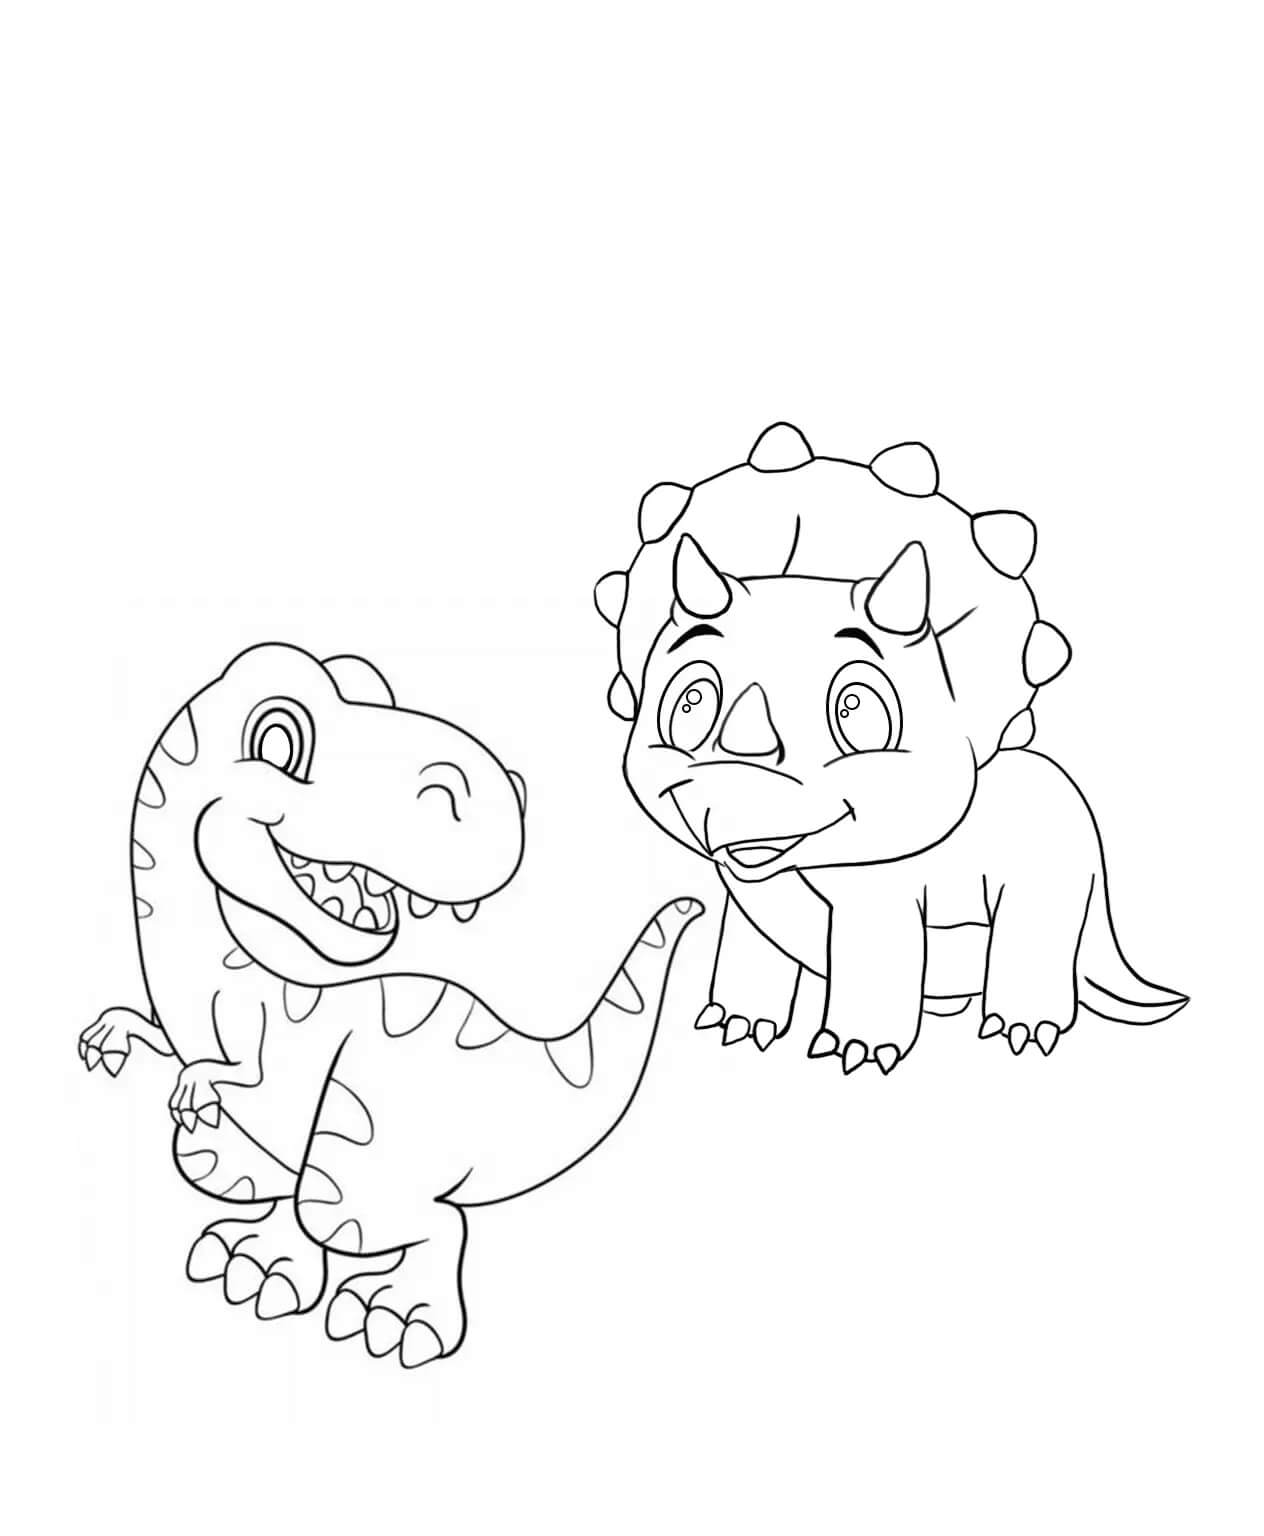 Chibi Tiranosaurio rex y Triceratop